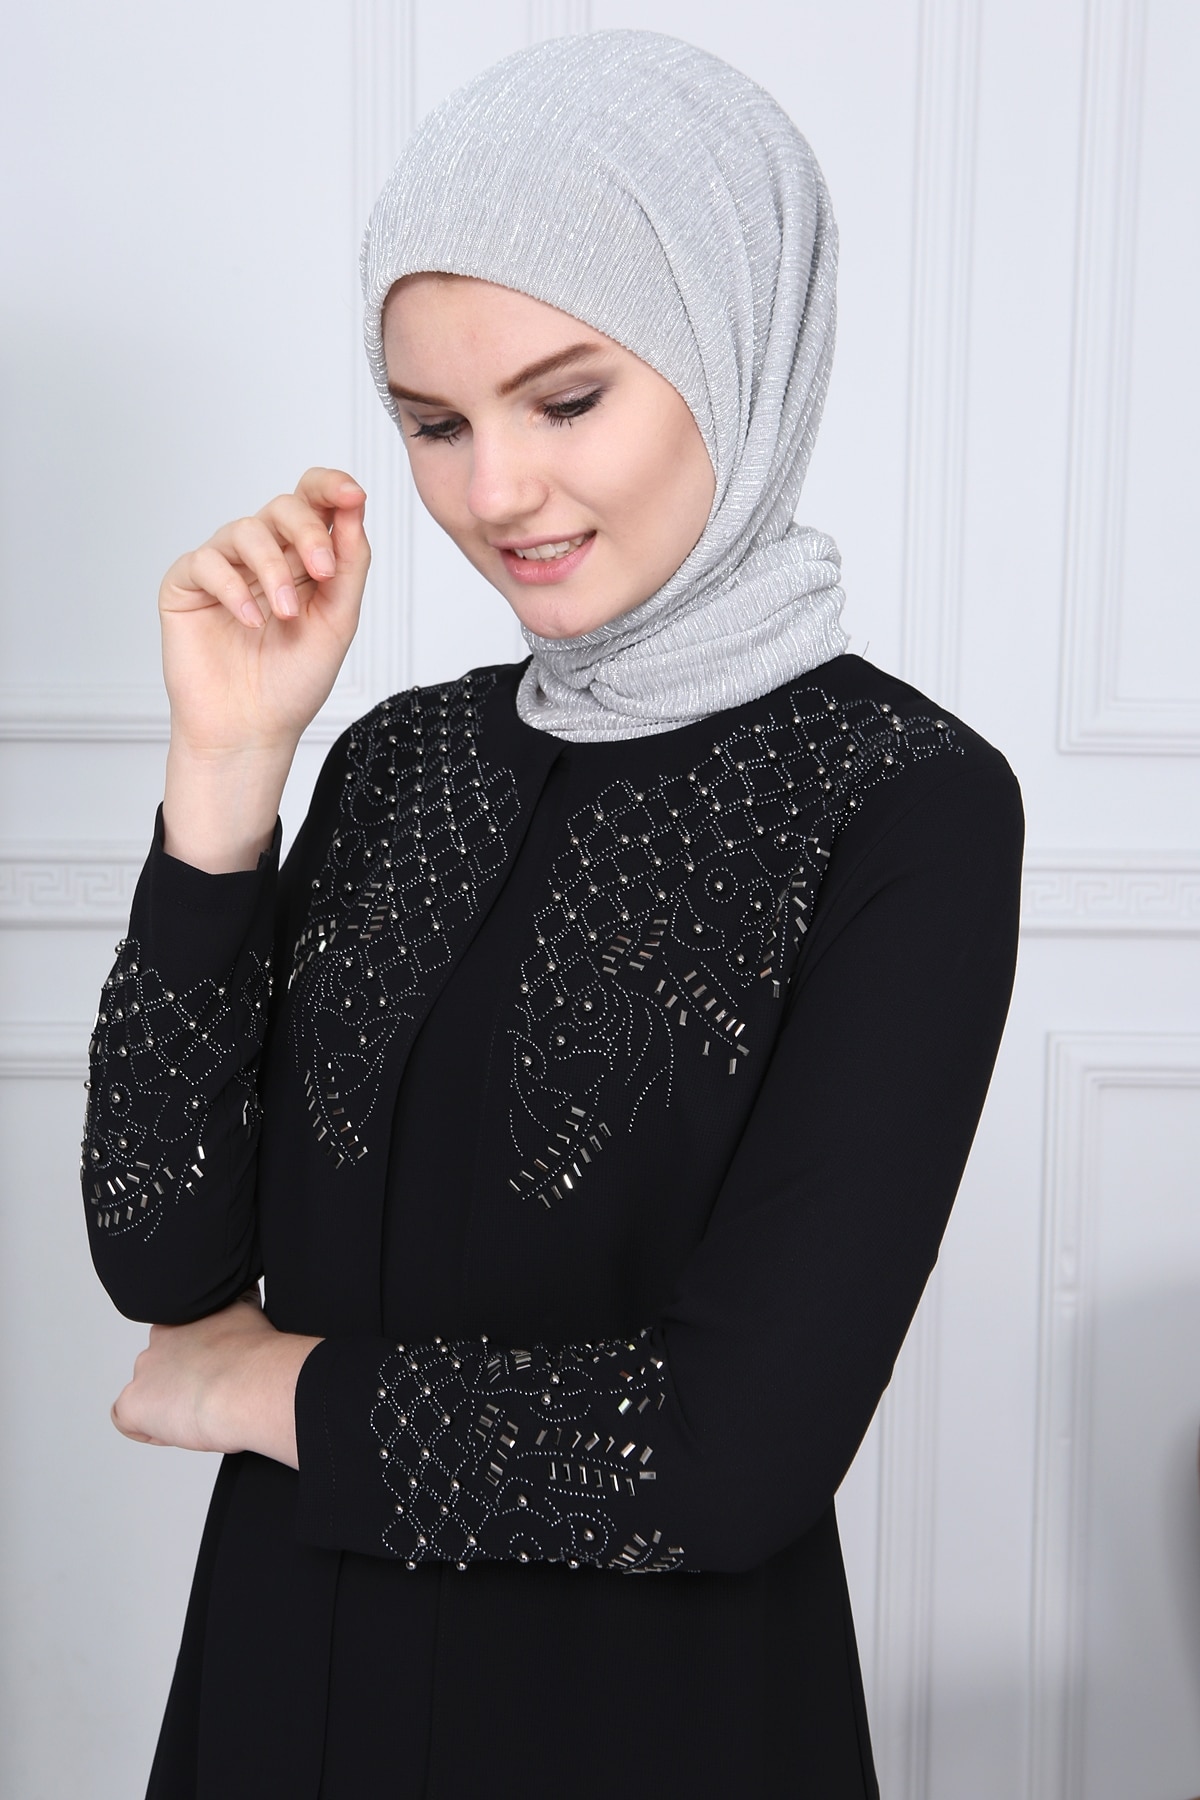 Erb Gemstone In The Cape Hijab Suit 1191 Black